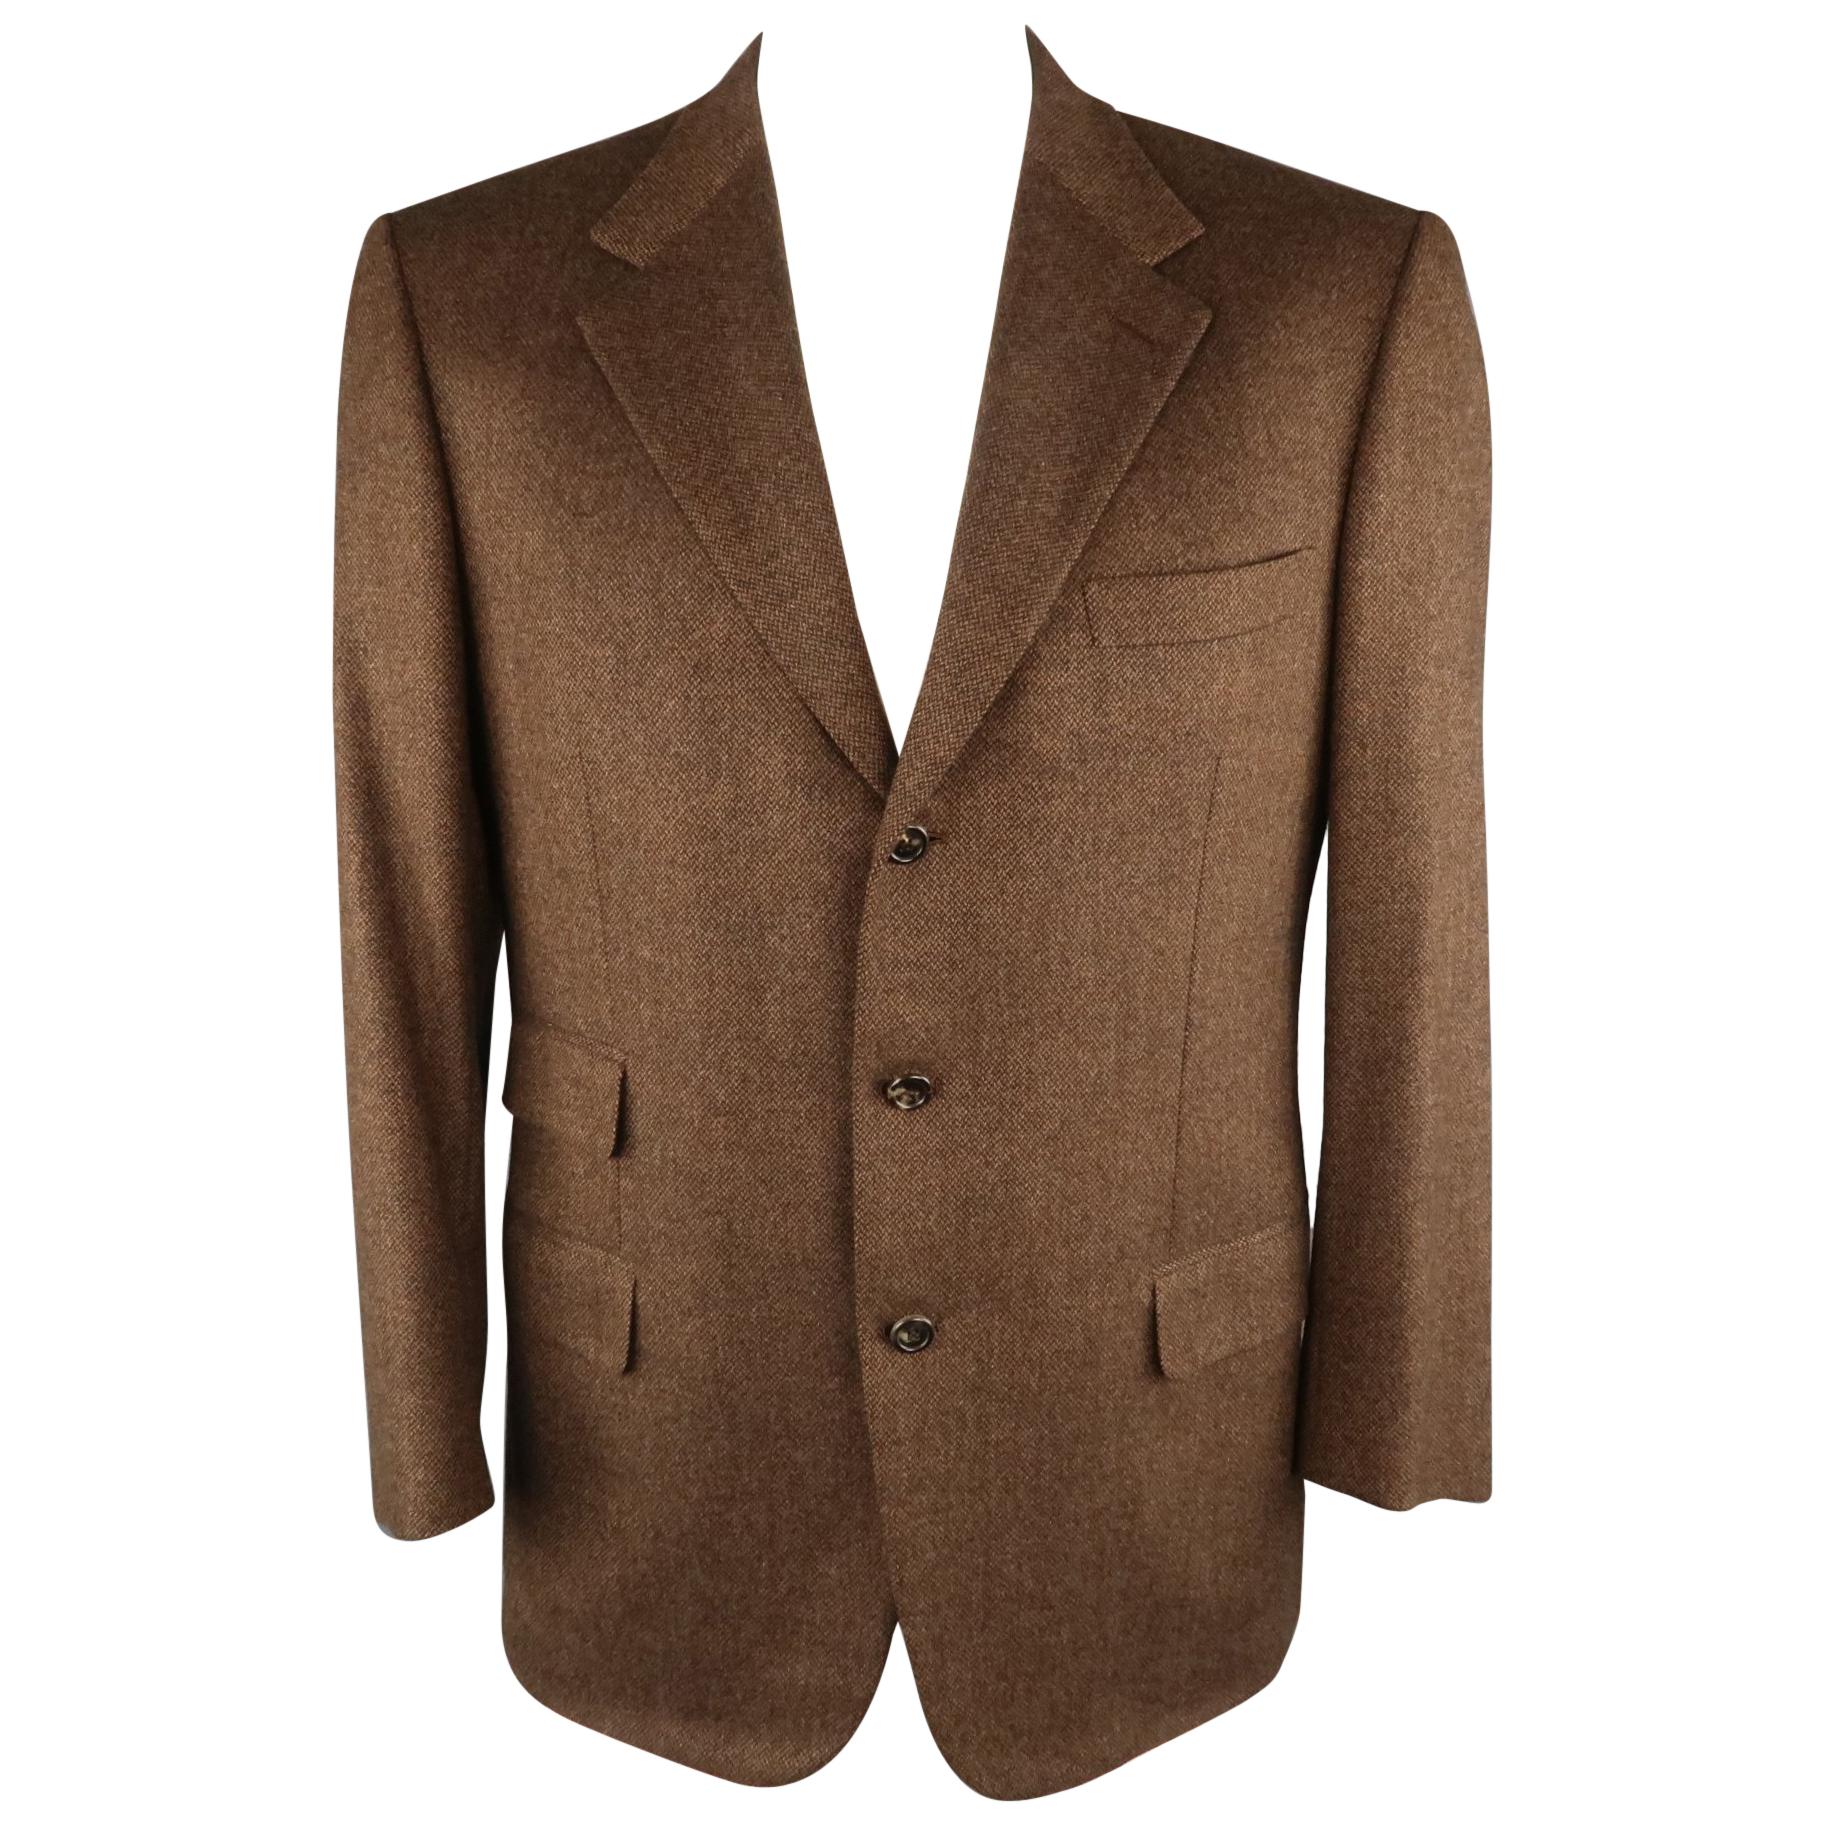  BRIONI 42 Regular Brown & Black Heather Wool / Cashmere Notch Lapel Sport Coat